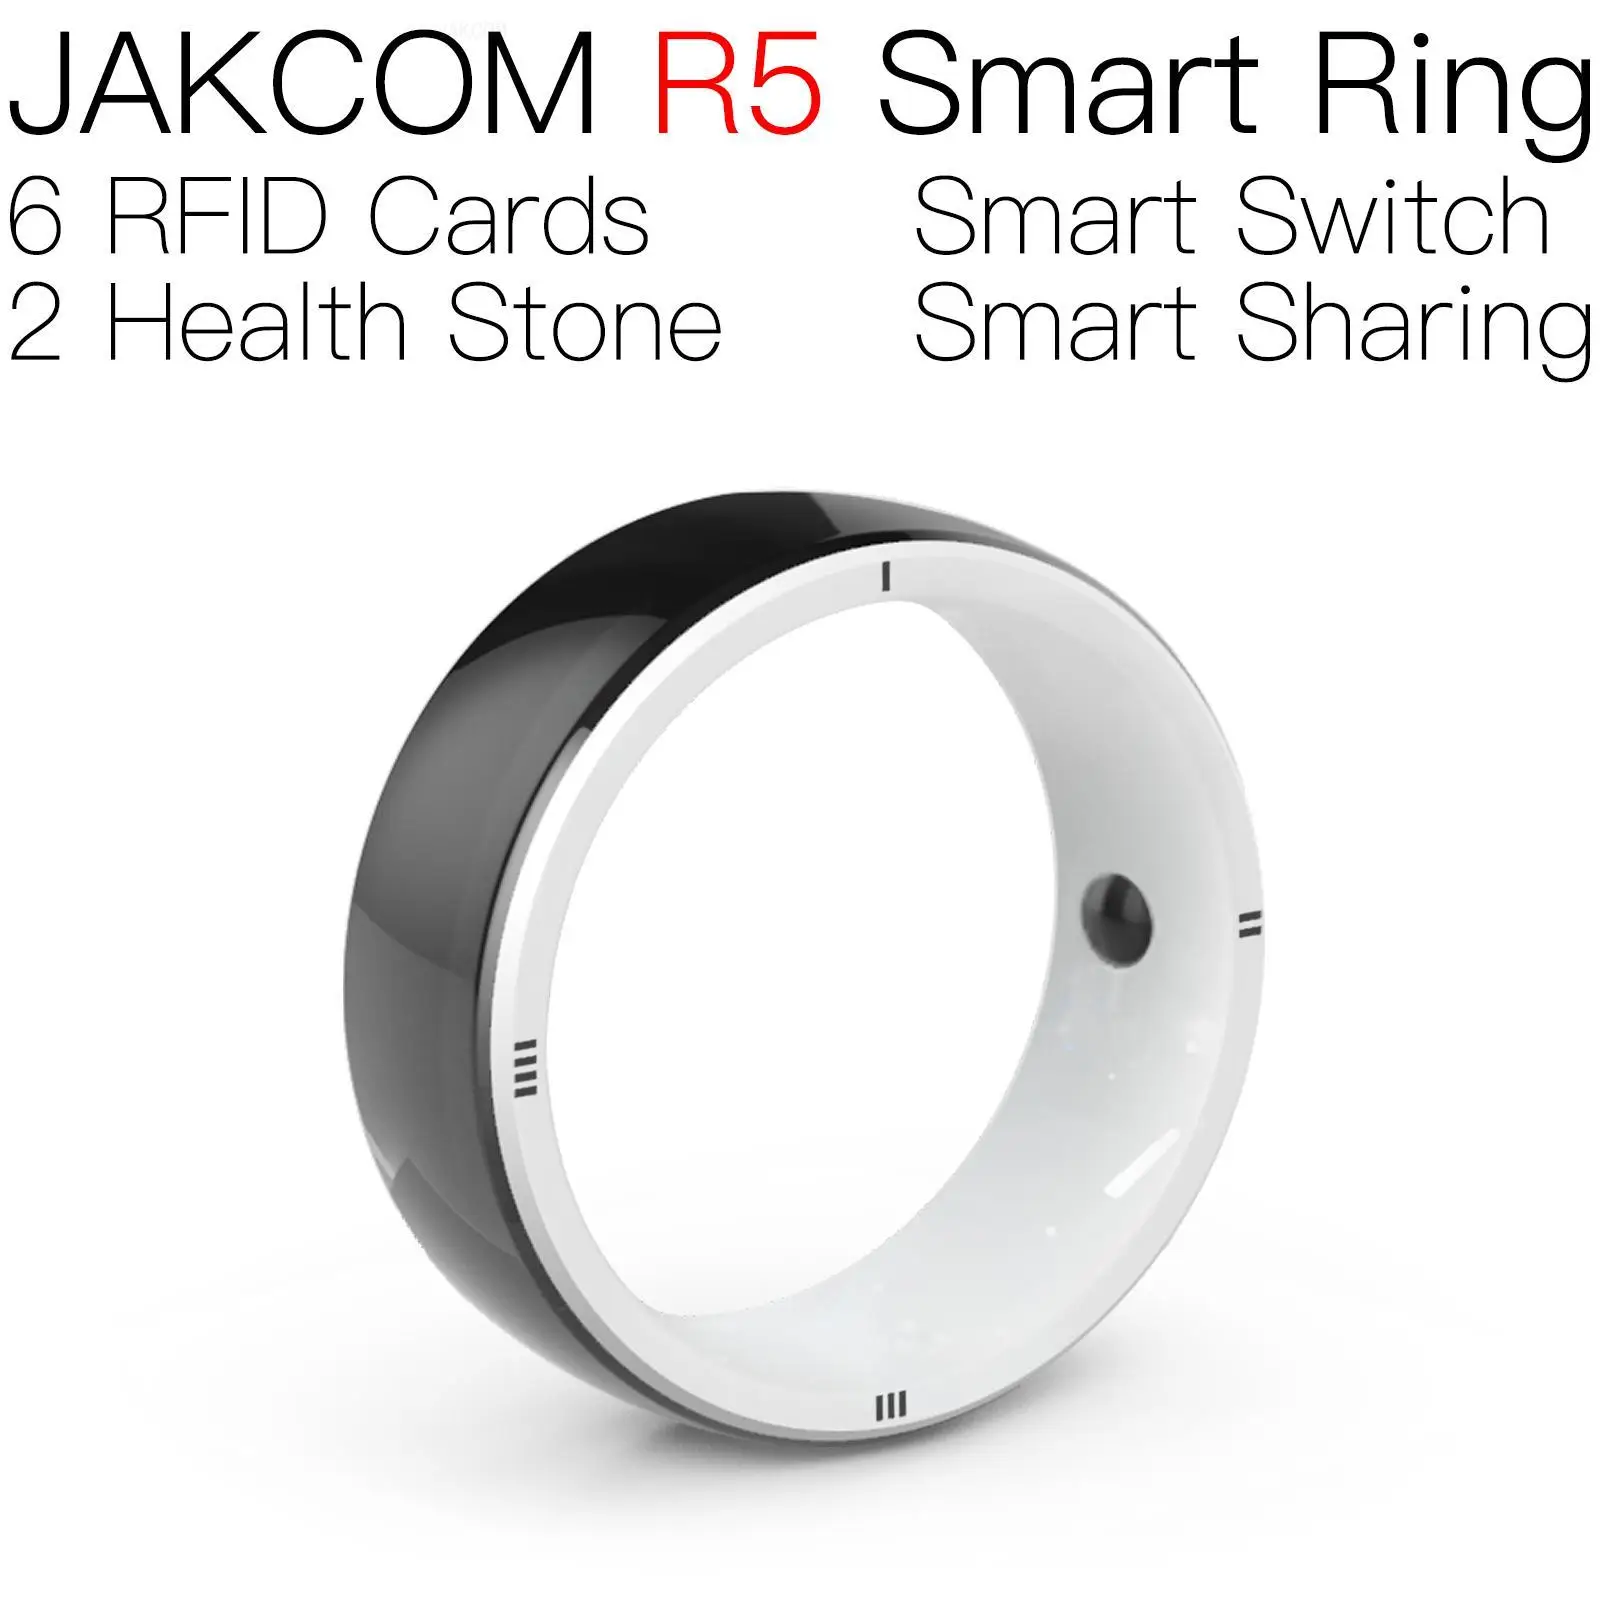 

JAKCOM R5 Smart Ring Newer than 125 khz rfid writer reader magnetic card rifd 125khz uhf tags injector qr code rewritable chip